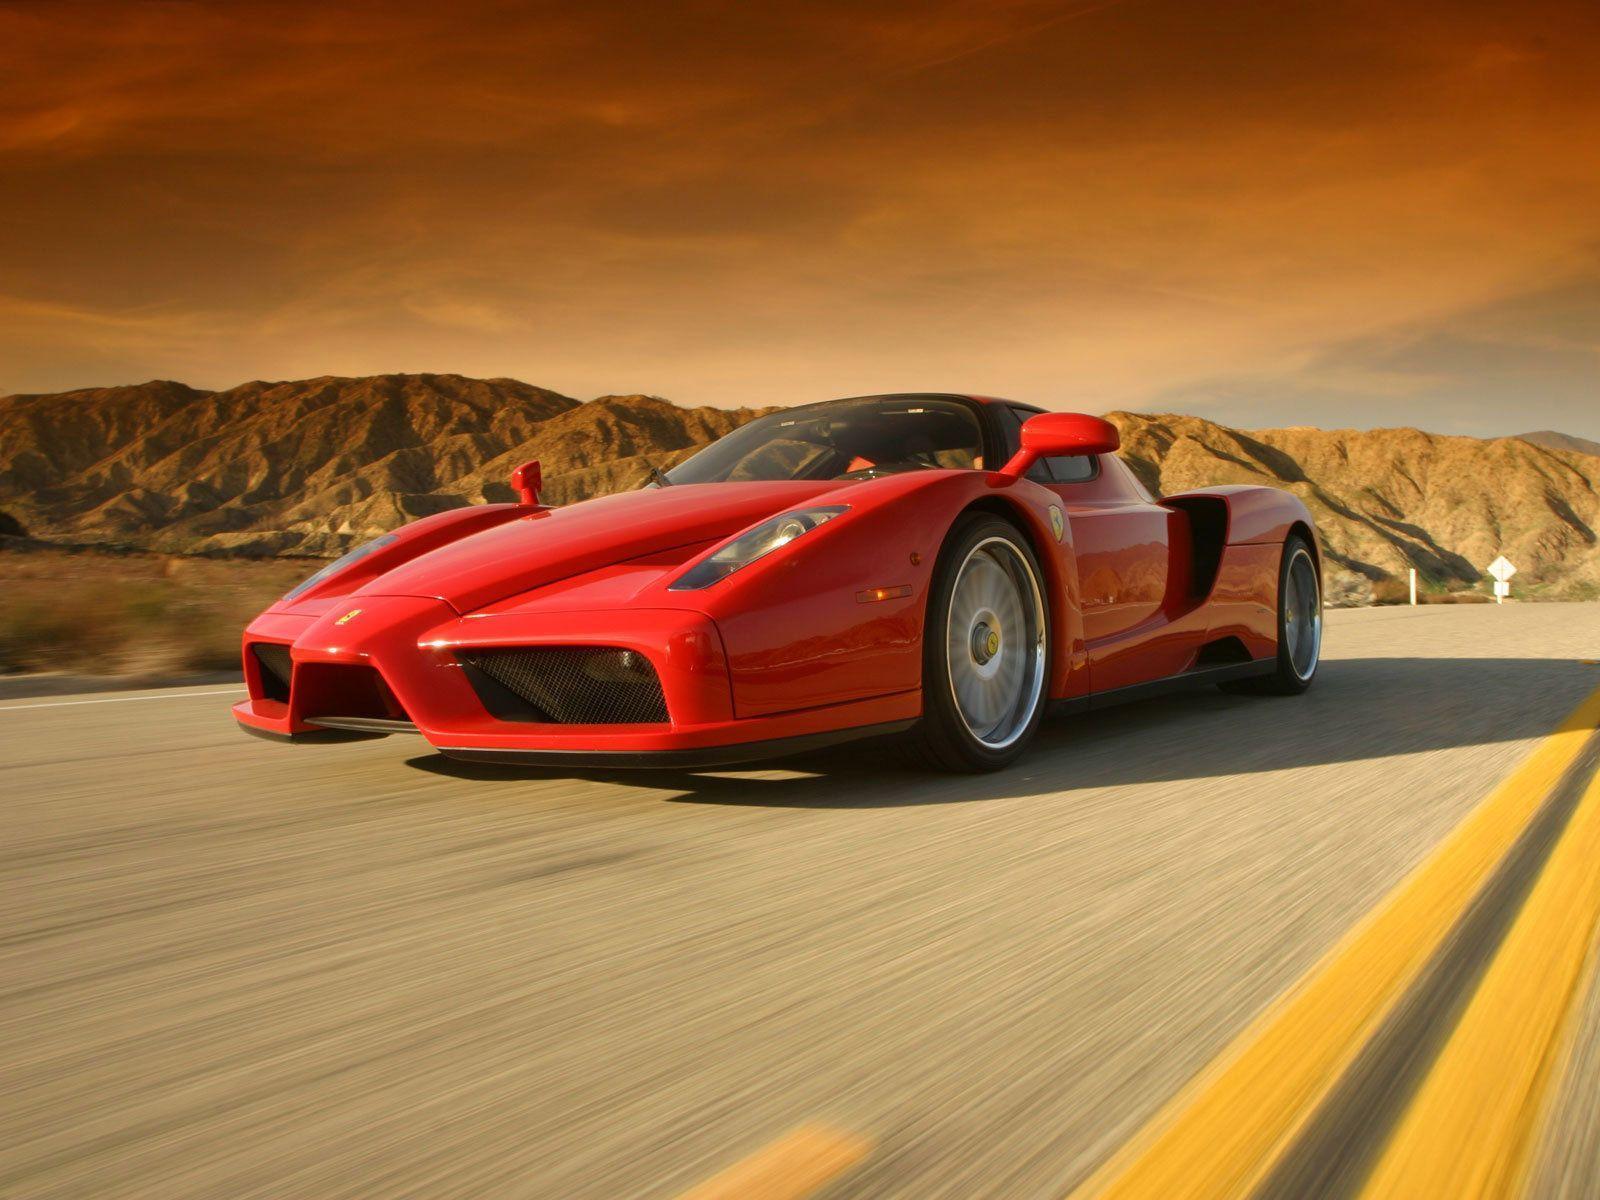 Enjoy this new Ferrari Enzo desktop background